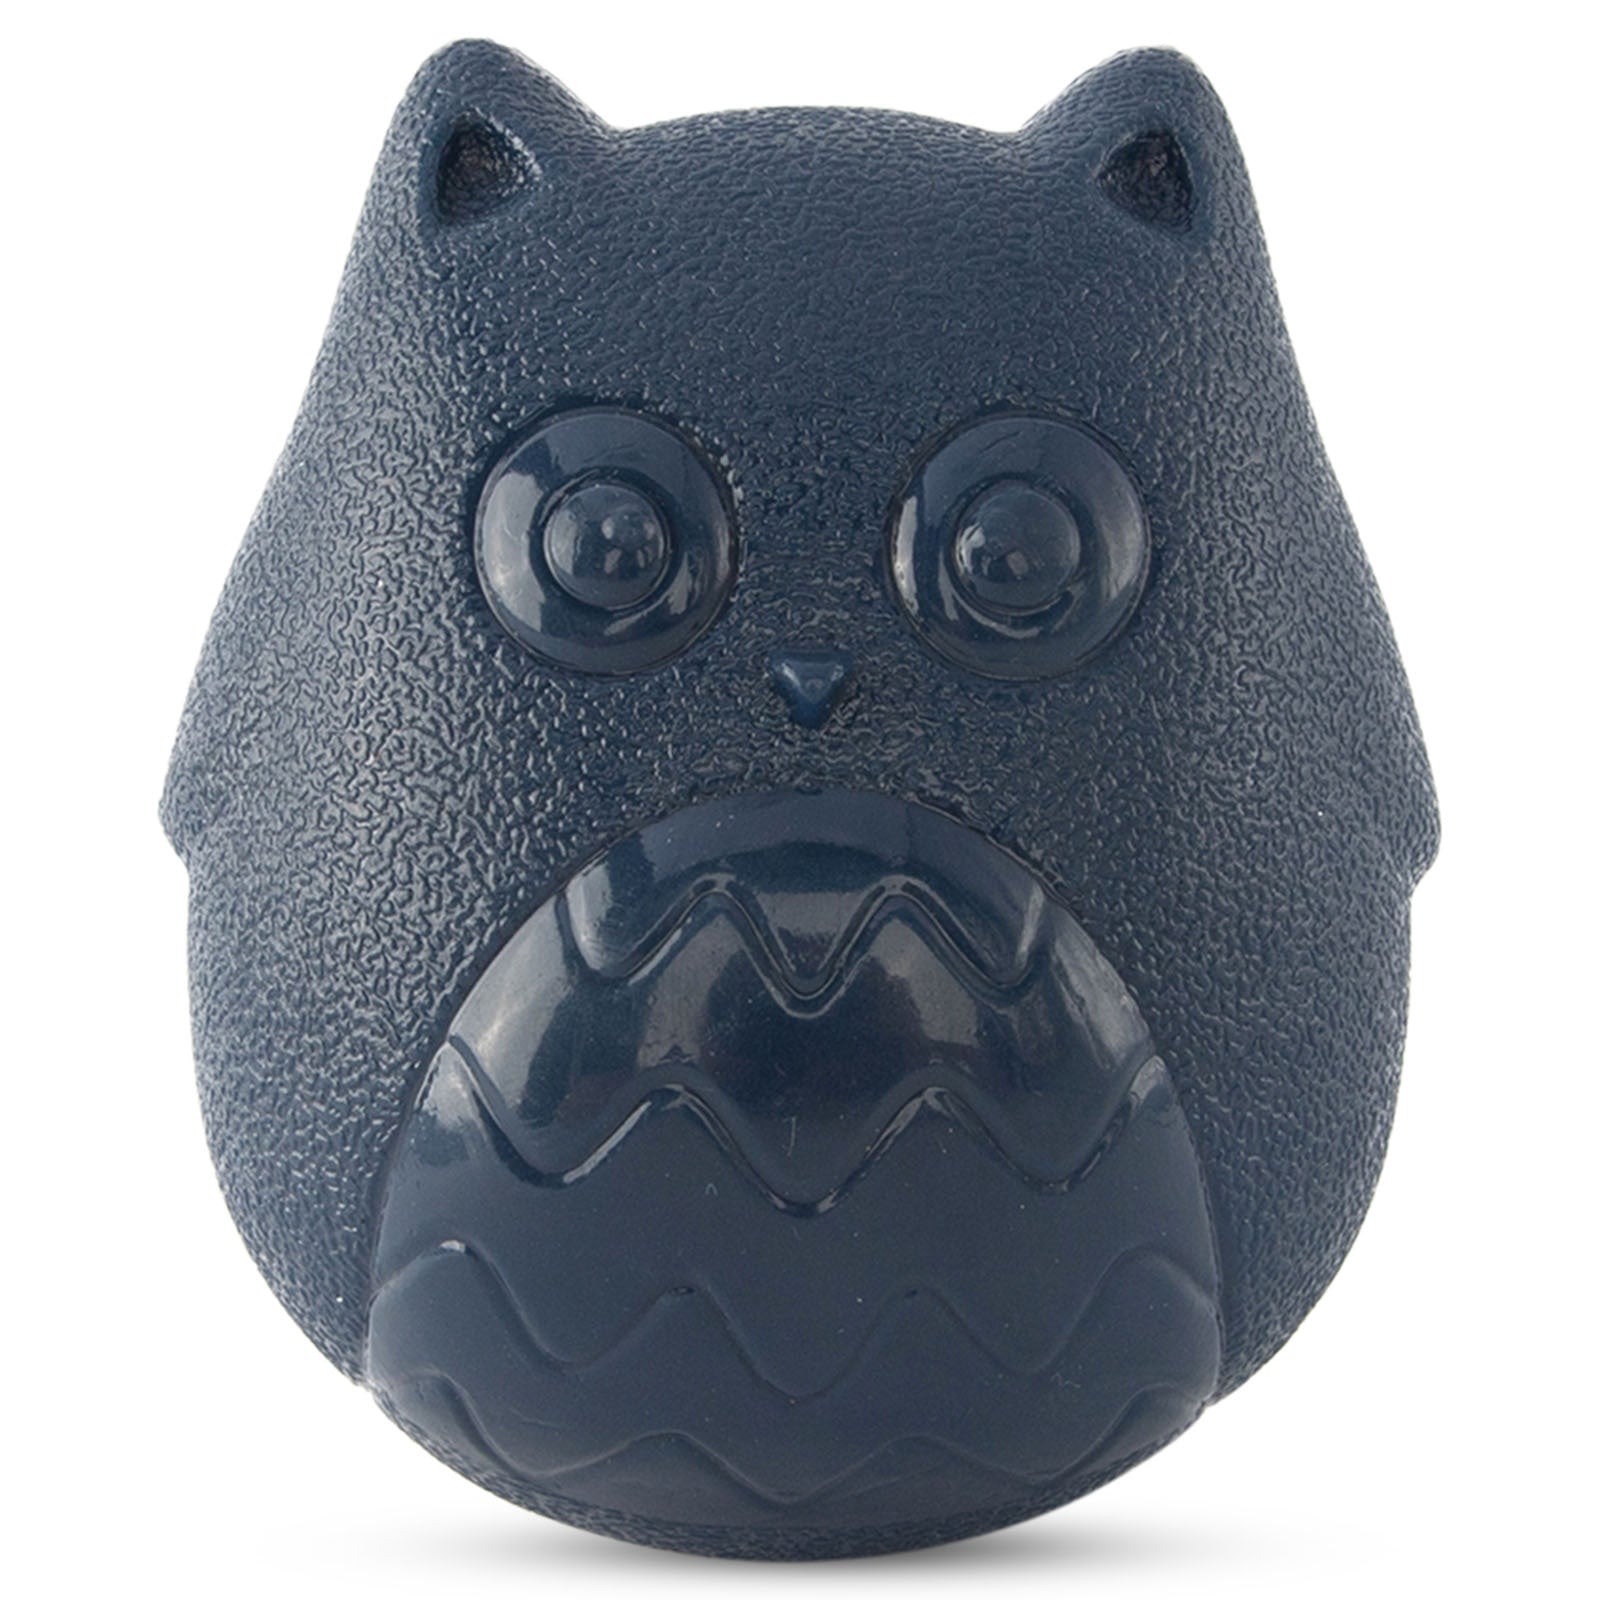 ZIPPY PAWS - ZippyTuff Squeaker Toy Owl